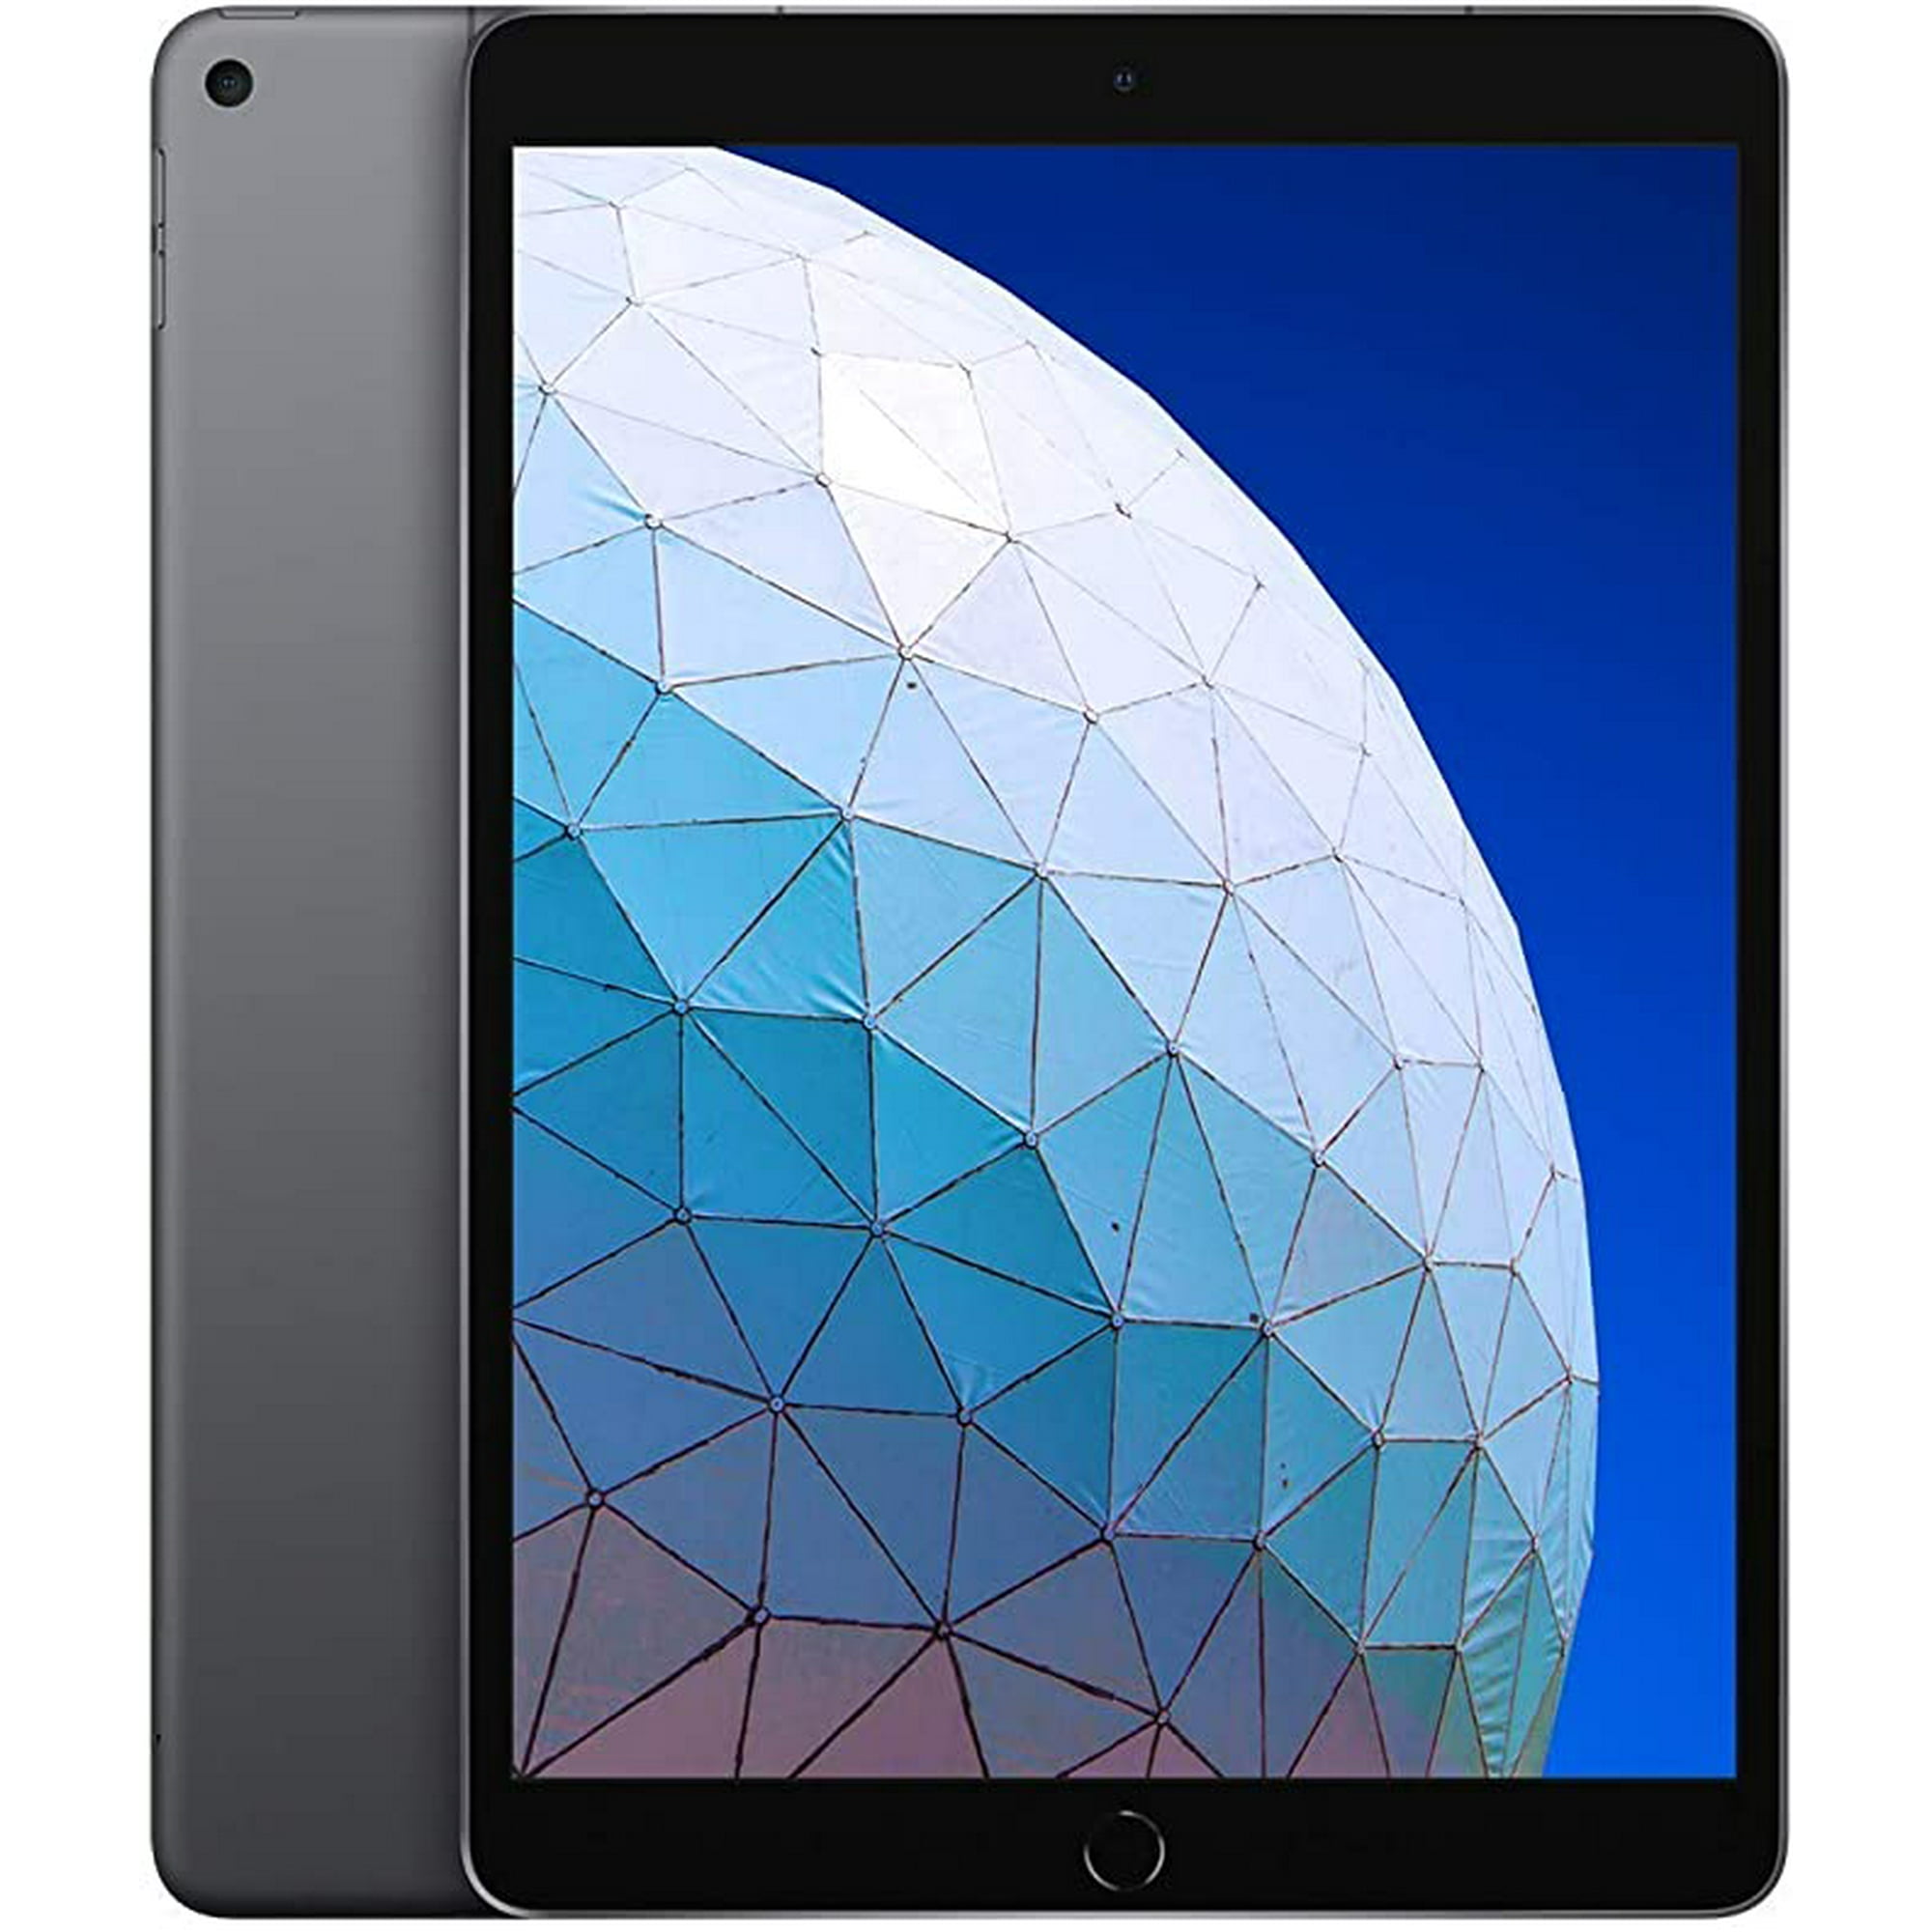 Refurbished Apple iPad Air 3 64GB Space Gray Wi-Fi MUUJ2VC/A 